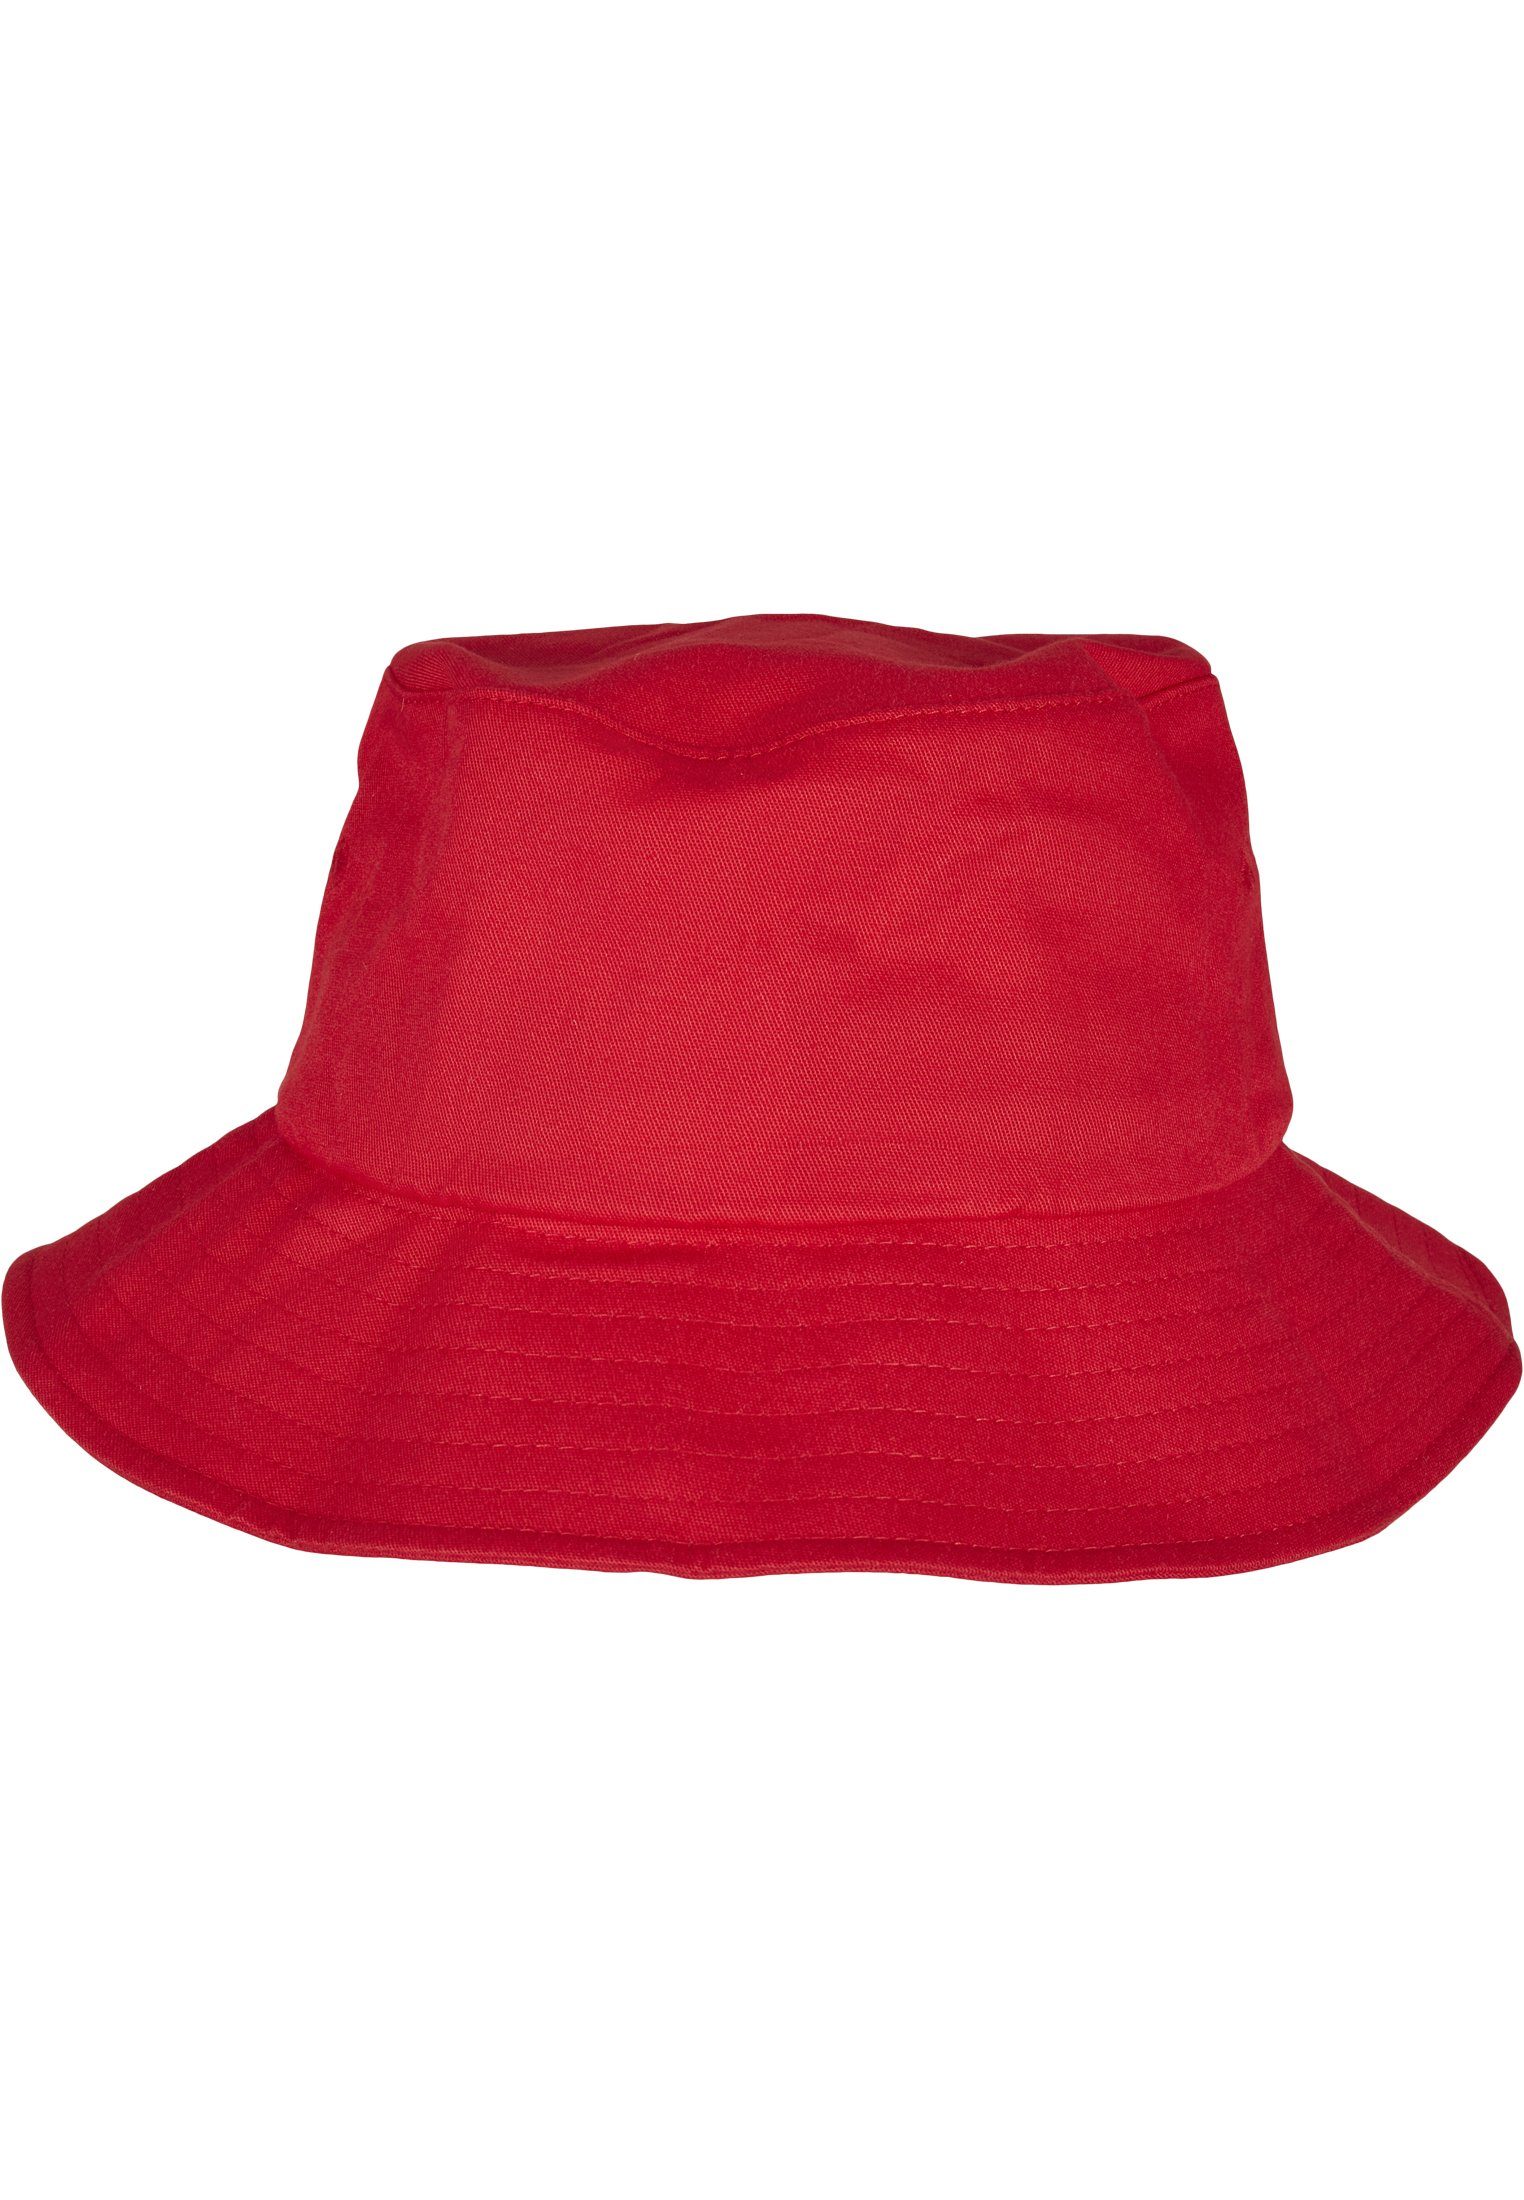 Hat Bucket Bad Cap Boy Accessoires MisterTee Snapback